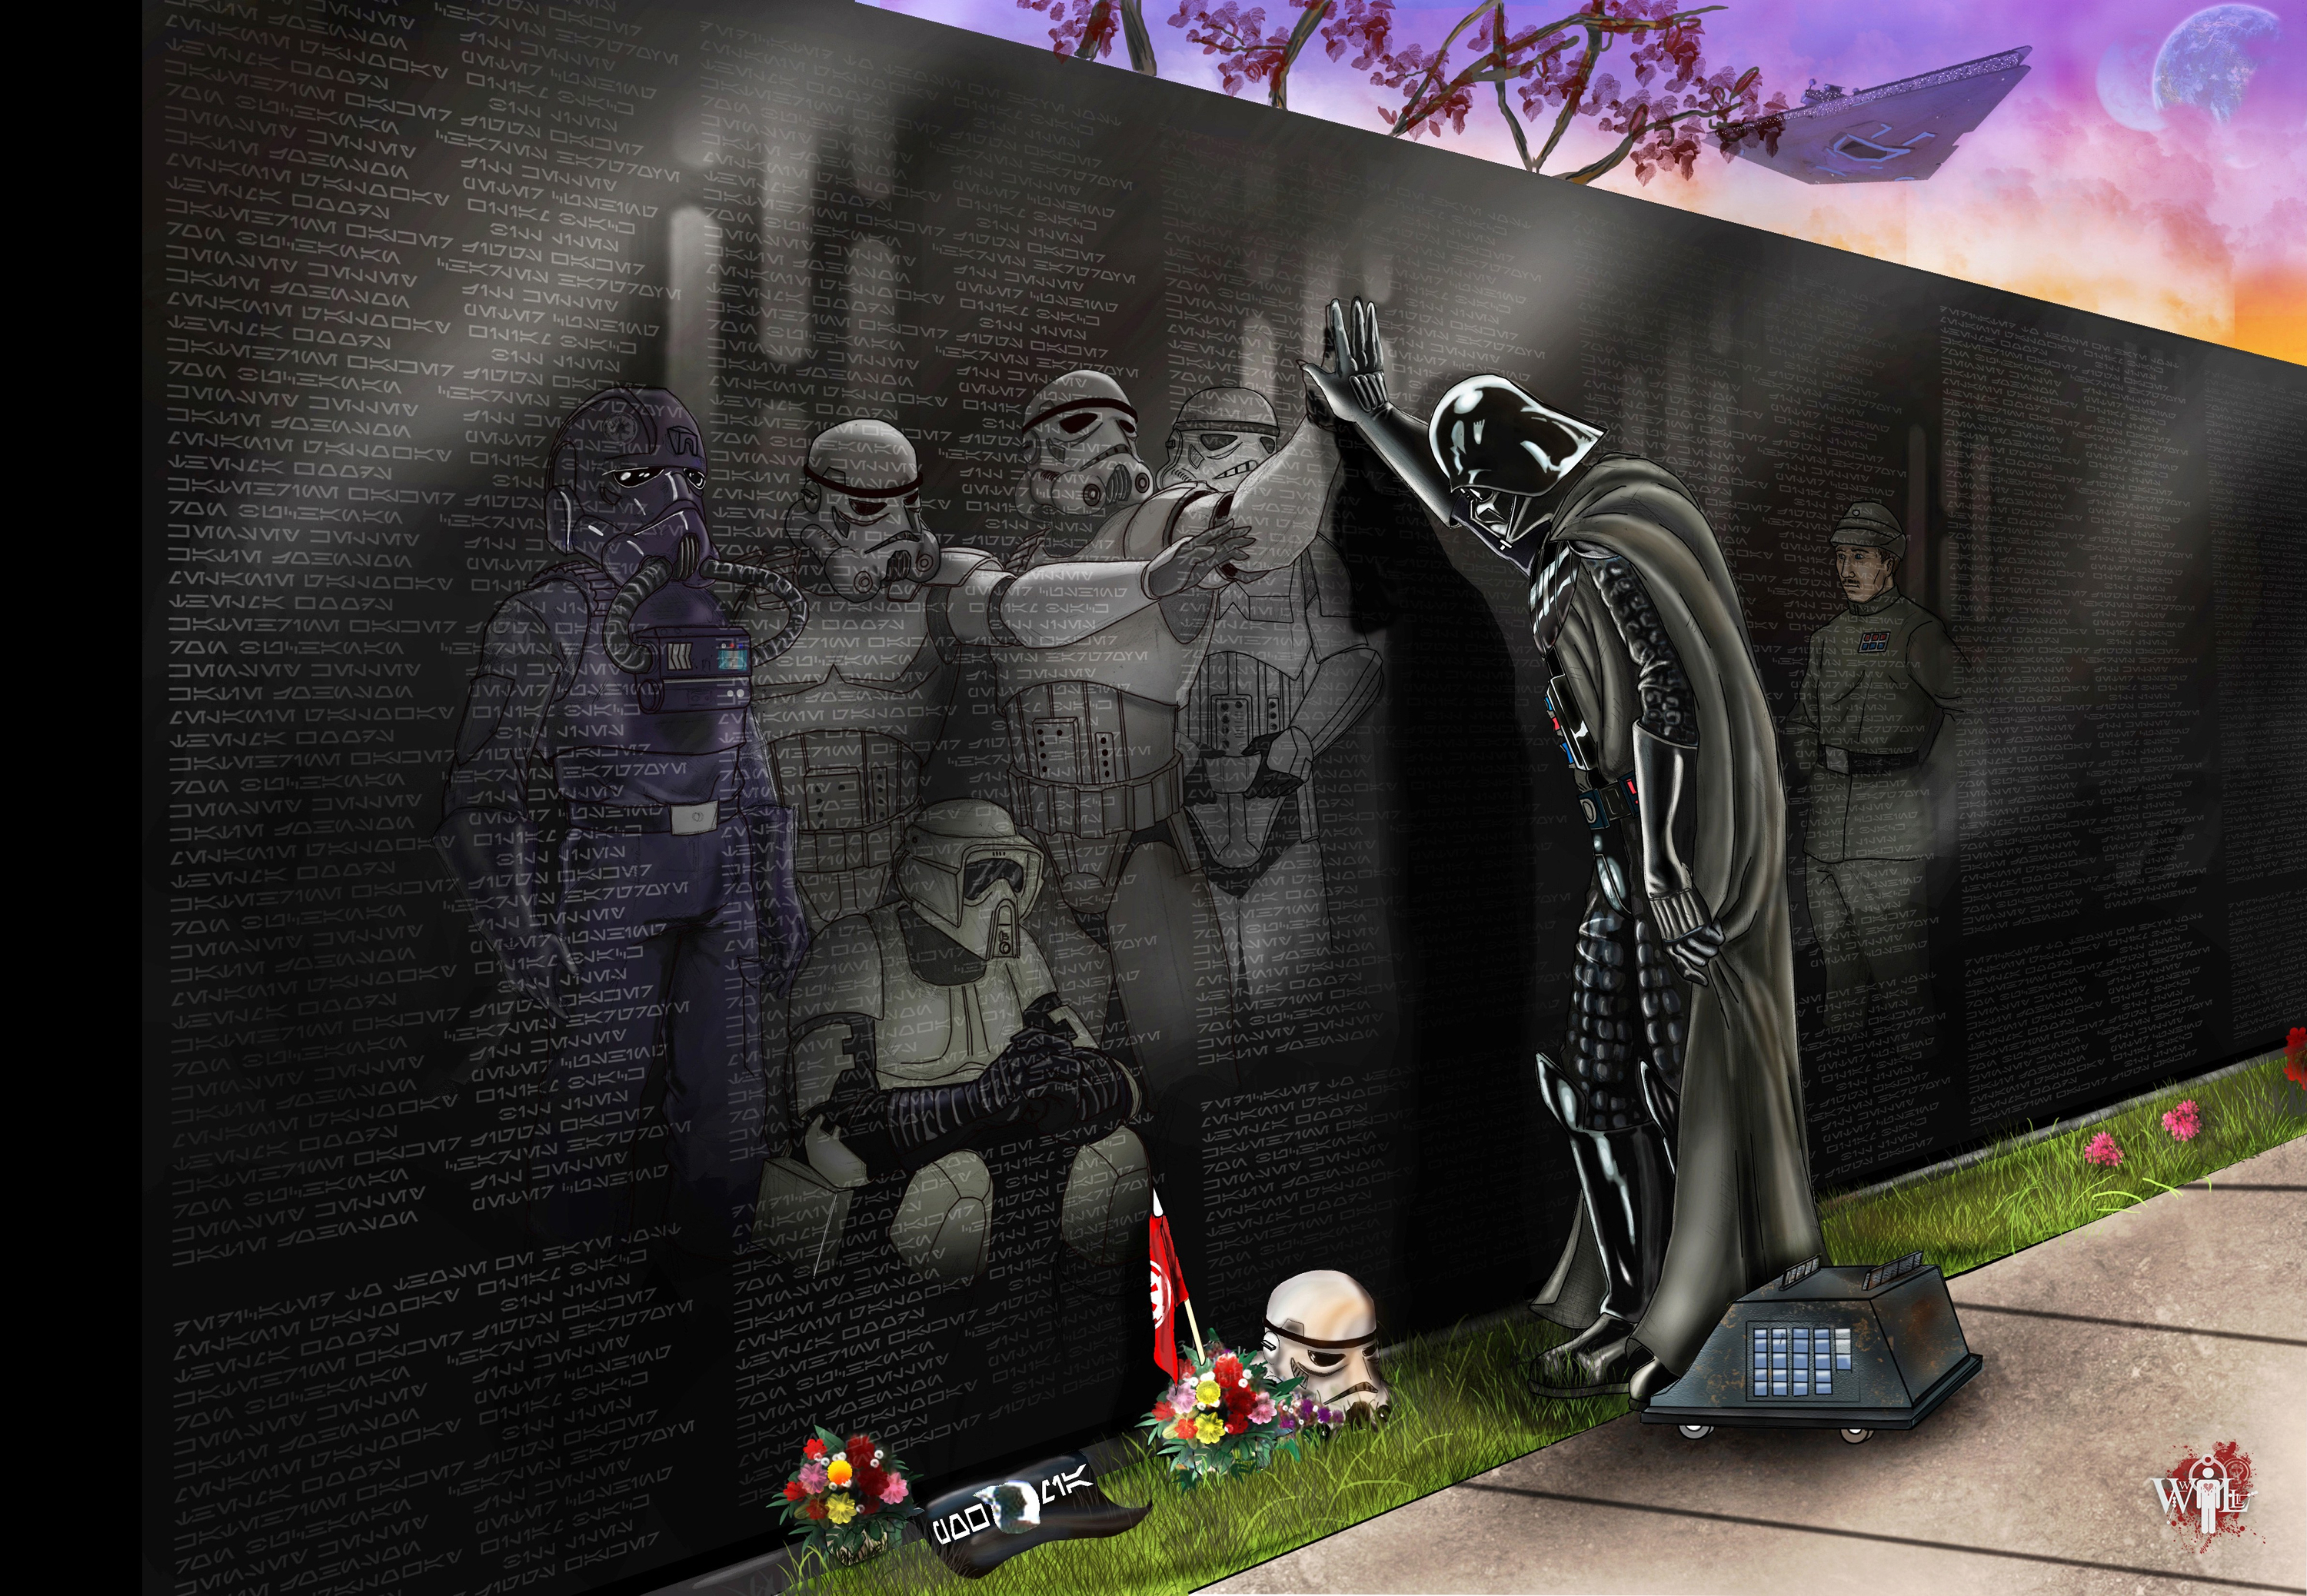 Darth Vader and stormtrooper in a memorial scene